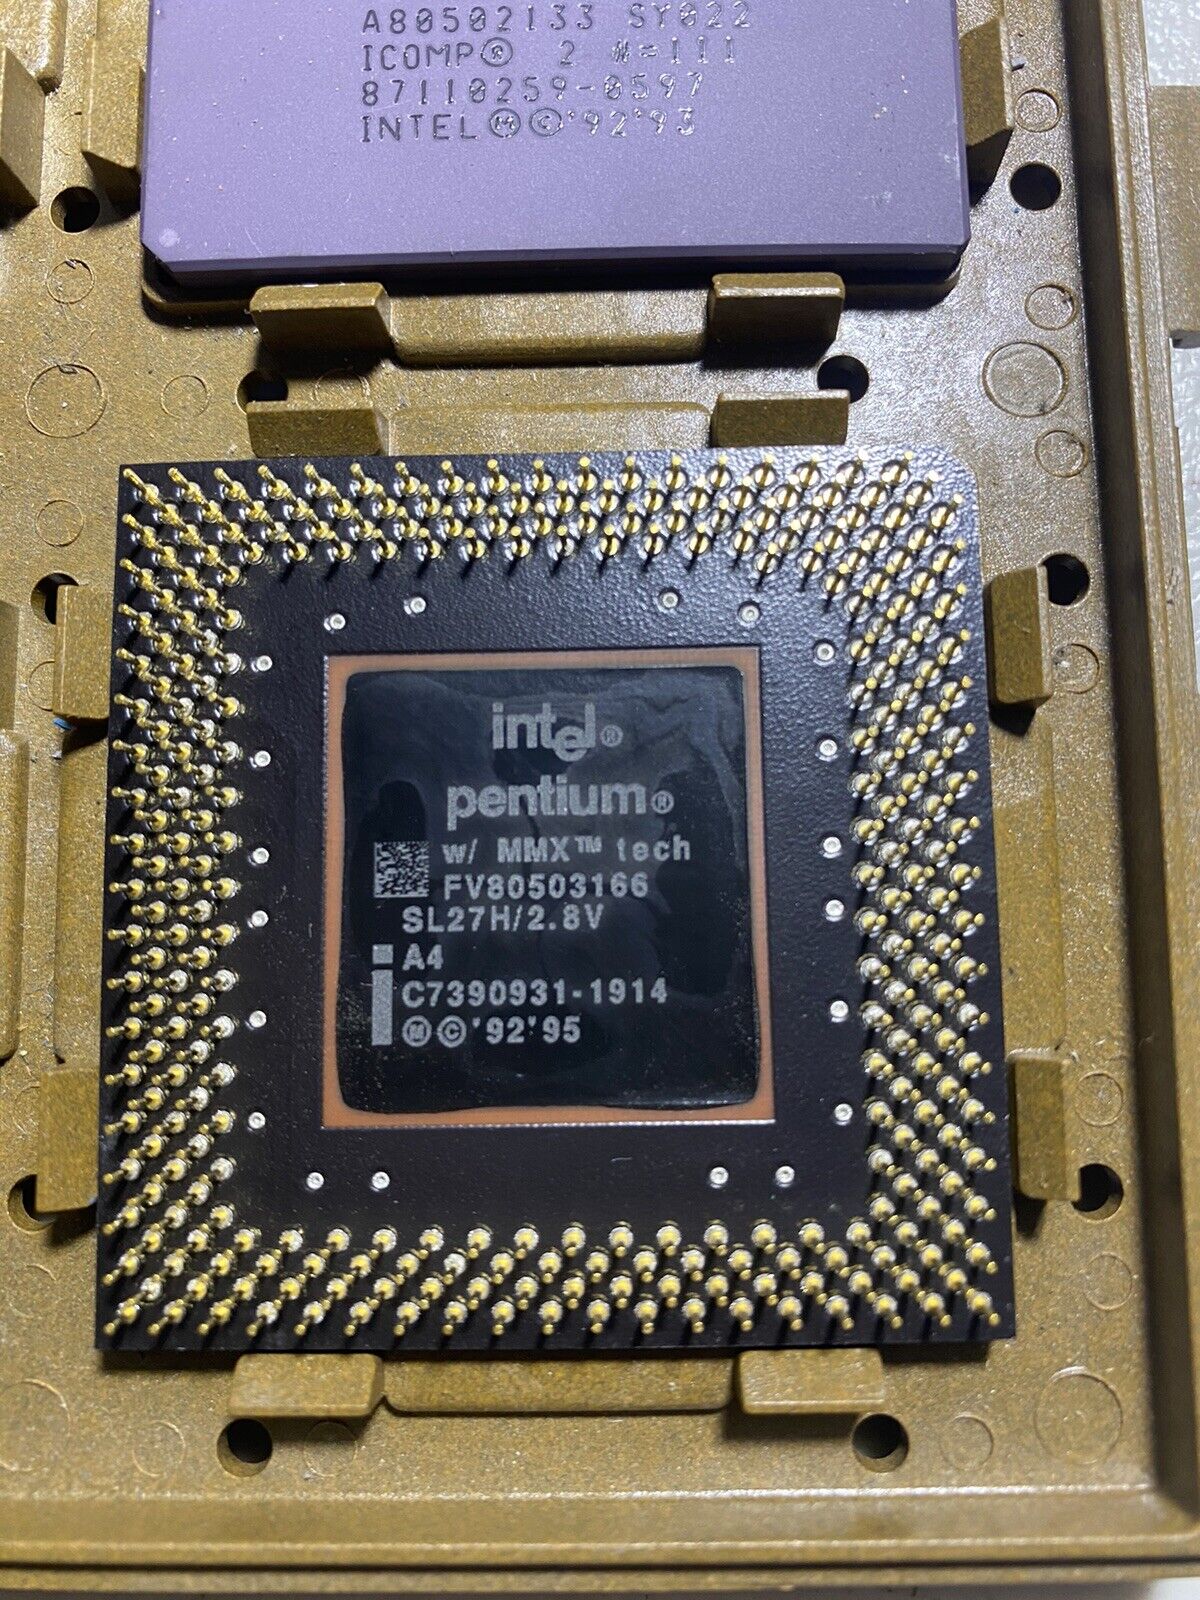 Intel SL27H Pentium 166mhz Mmx Socket 7 PPGA Processor